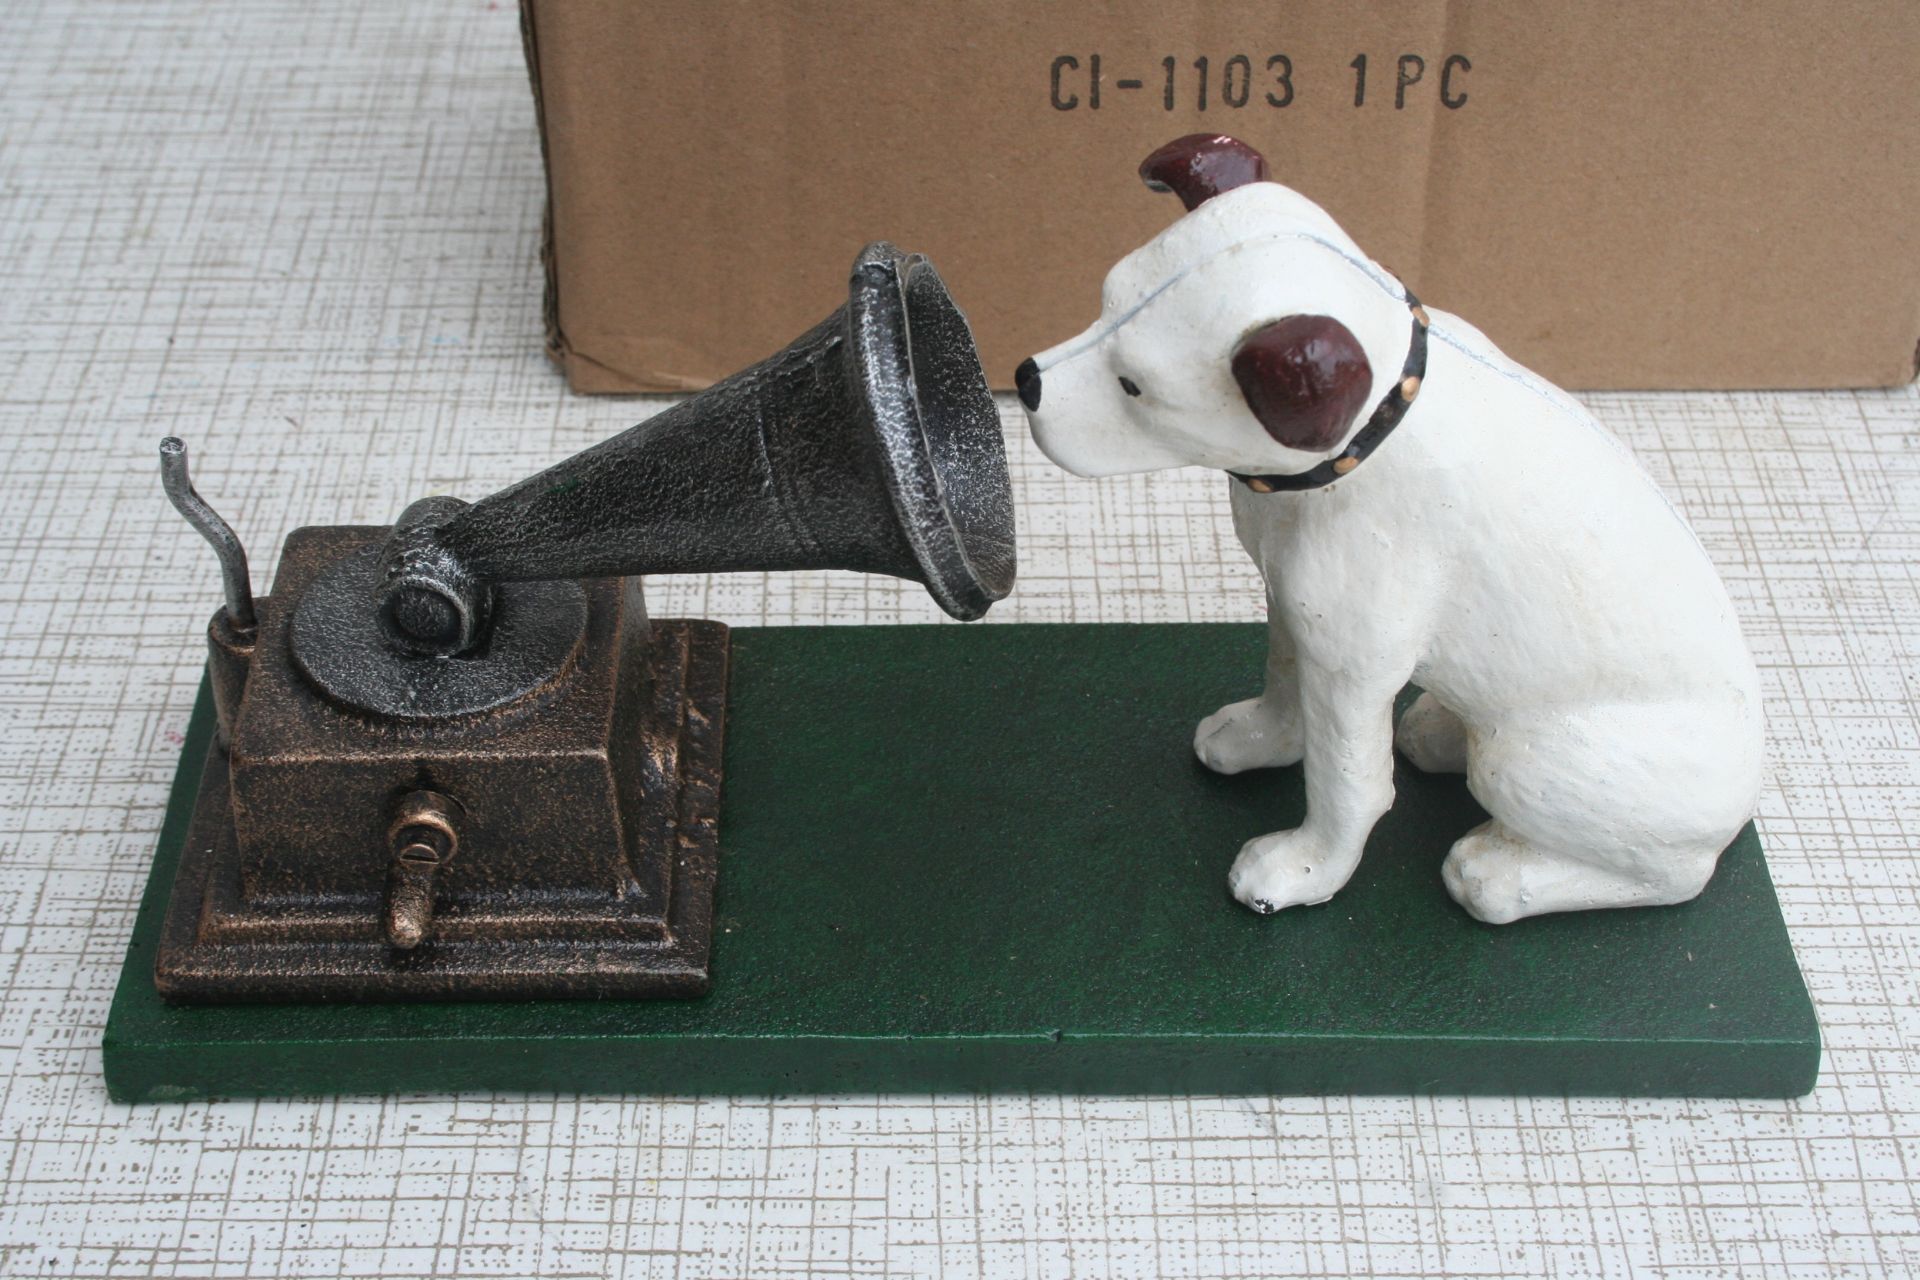 HMV dog & gramophone